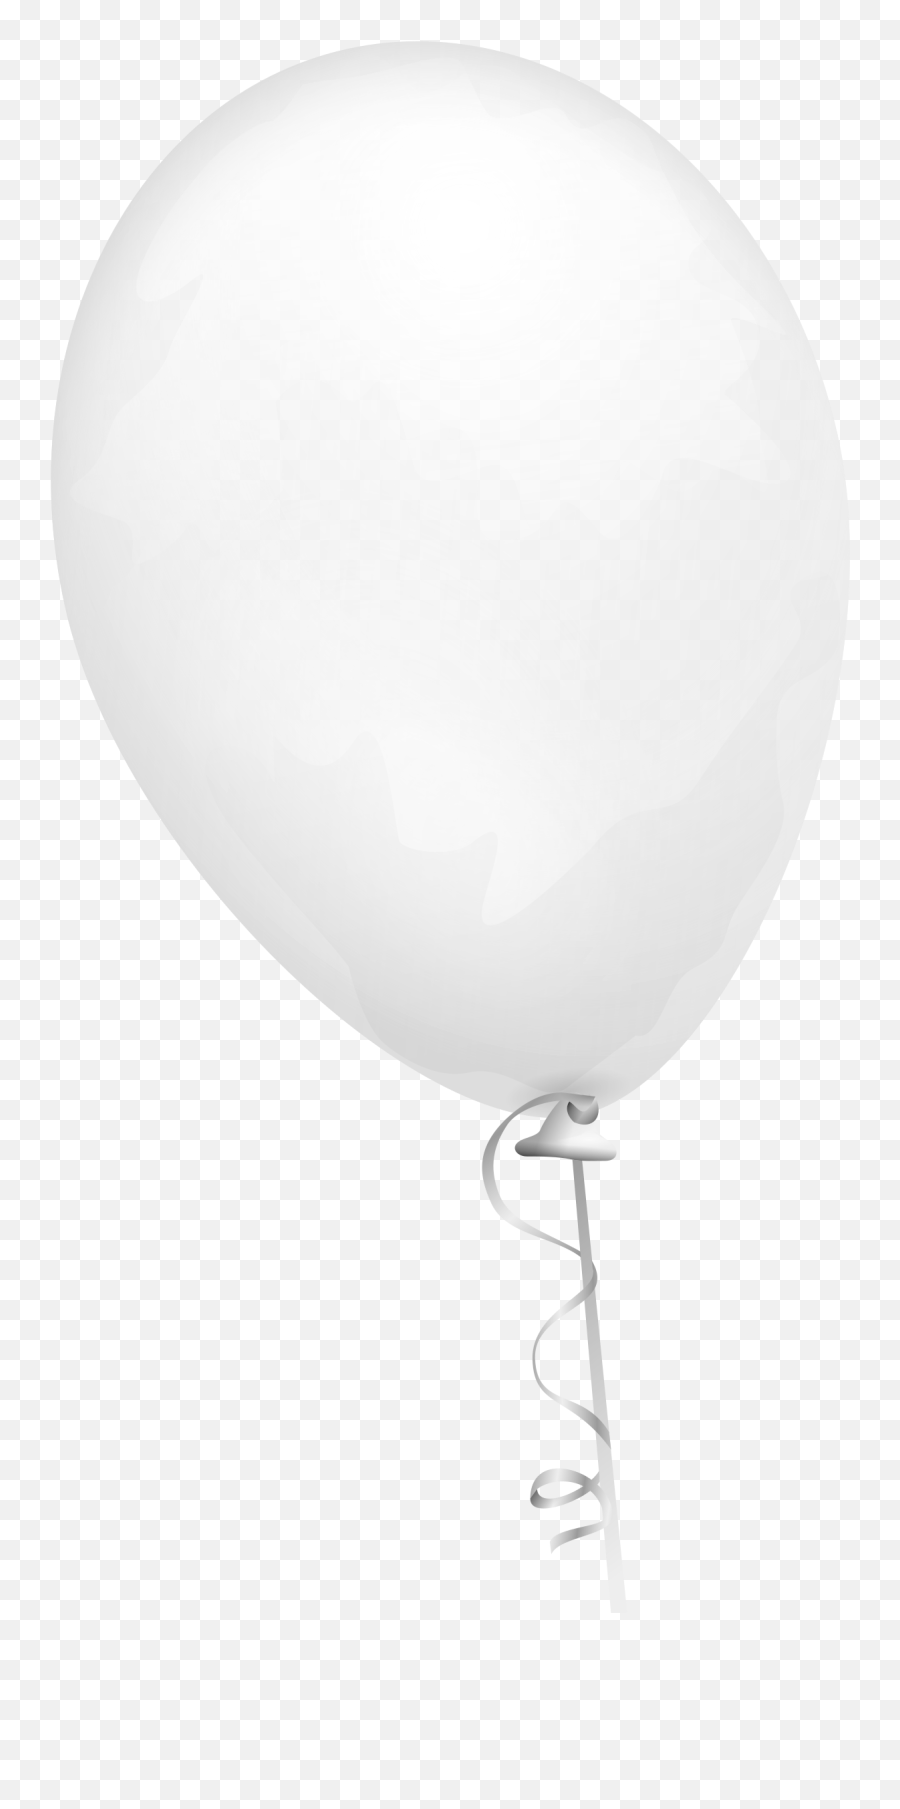 Big Image - Transparent Background White Balloon On Transparent Png,Balloon Png Transparent Background